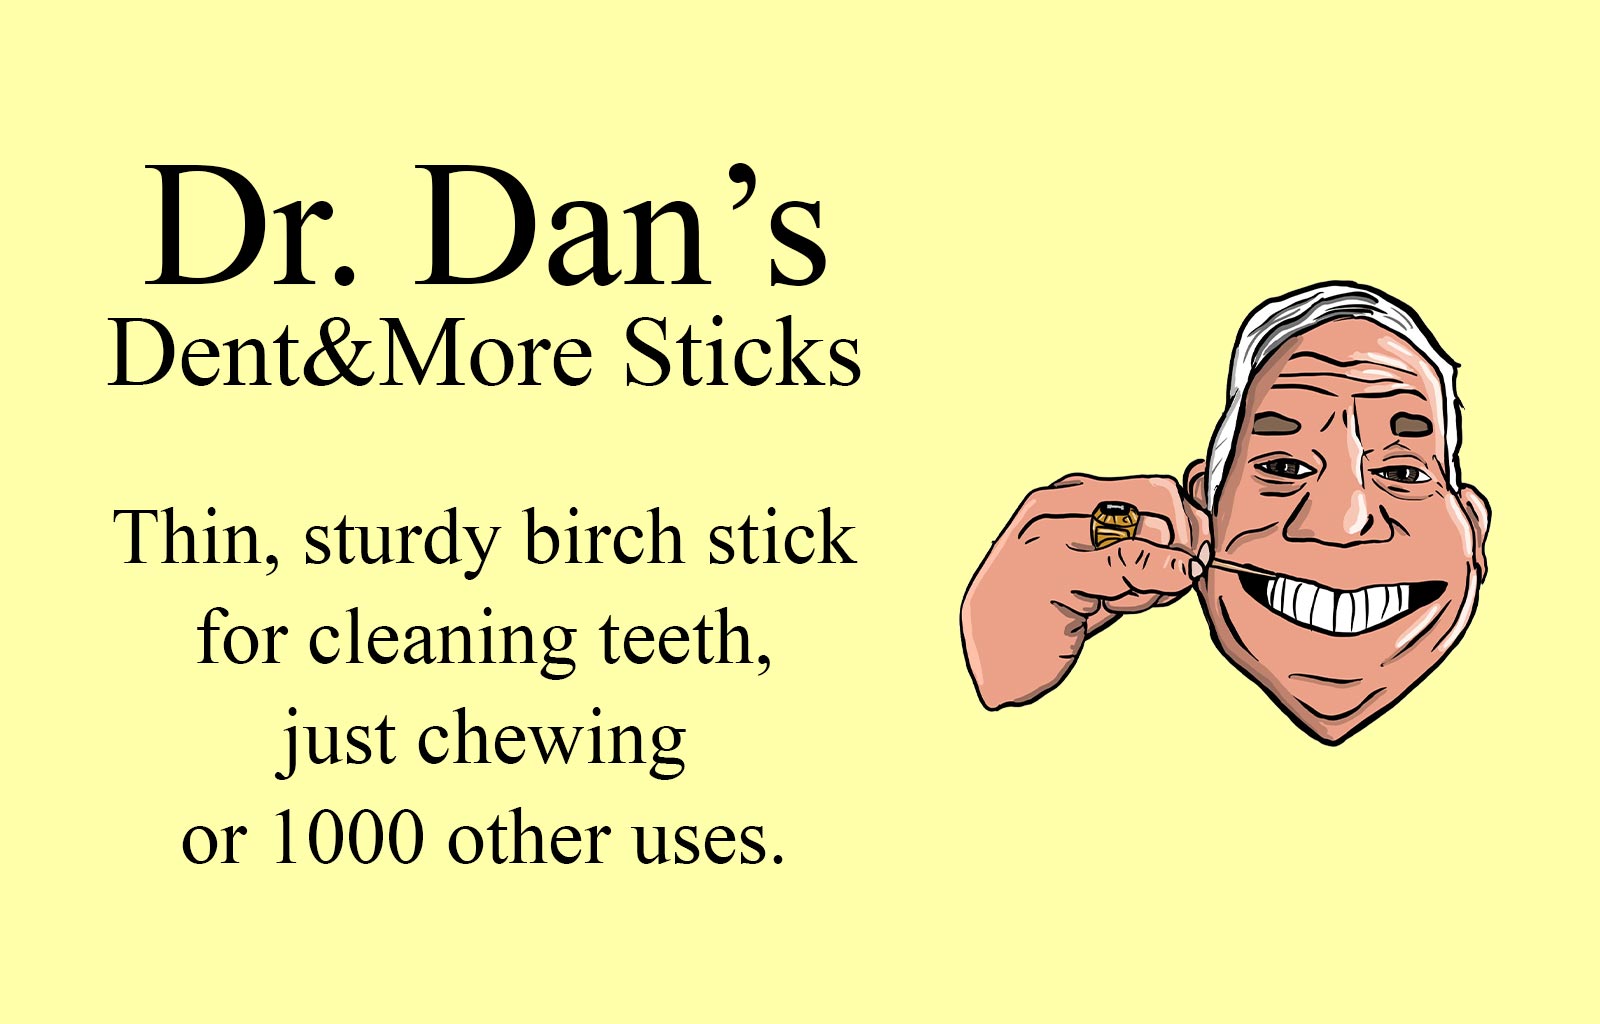 Dr. Dan's Dent&More Sticks